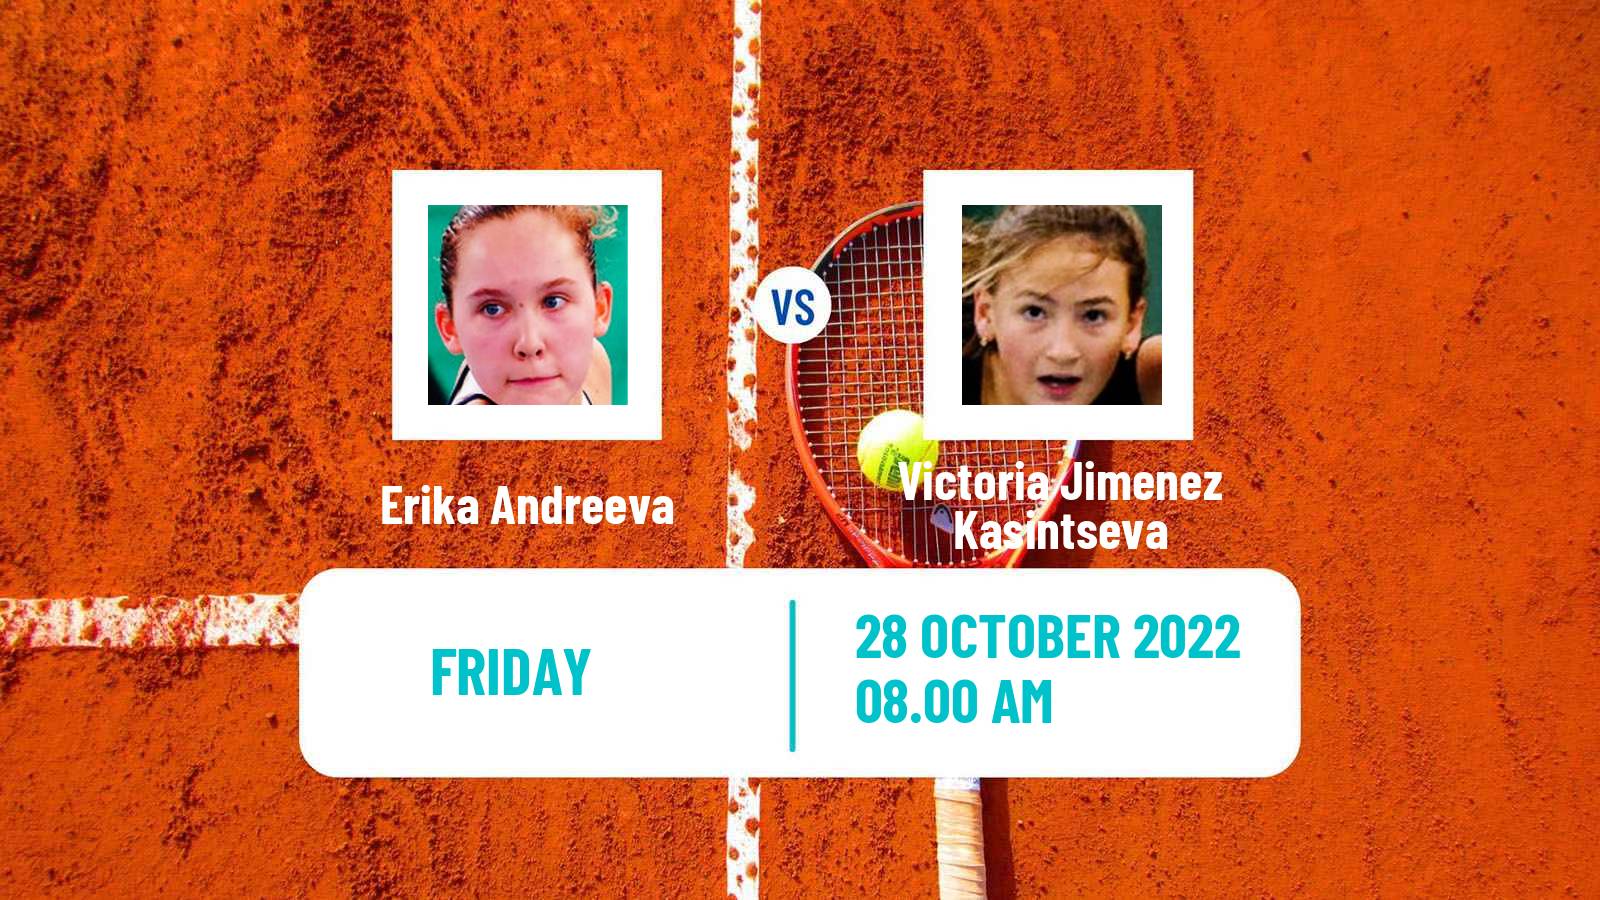 Tennis ITF Tournaments Erika Andreeva - Victoria Jimenez Kasintseva